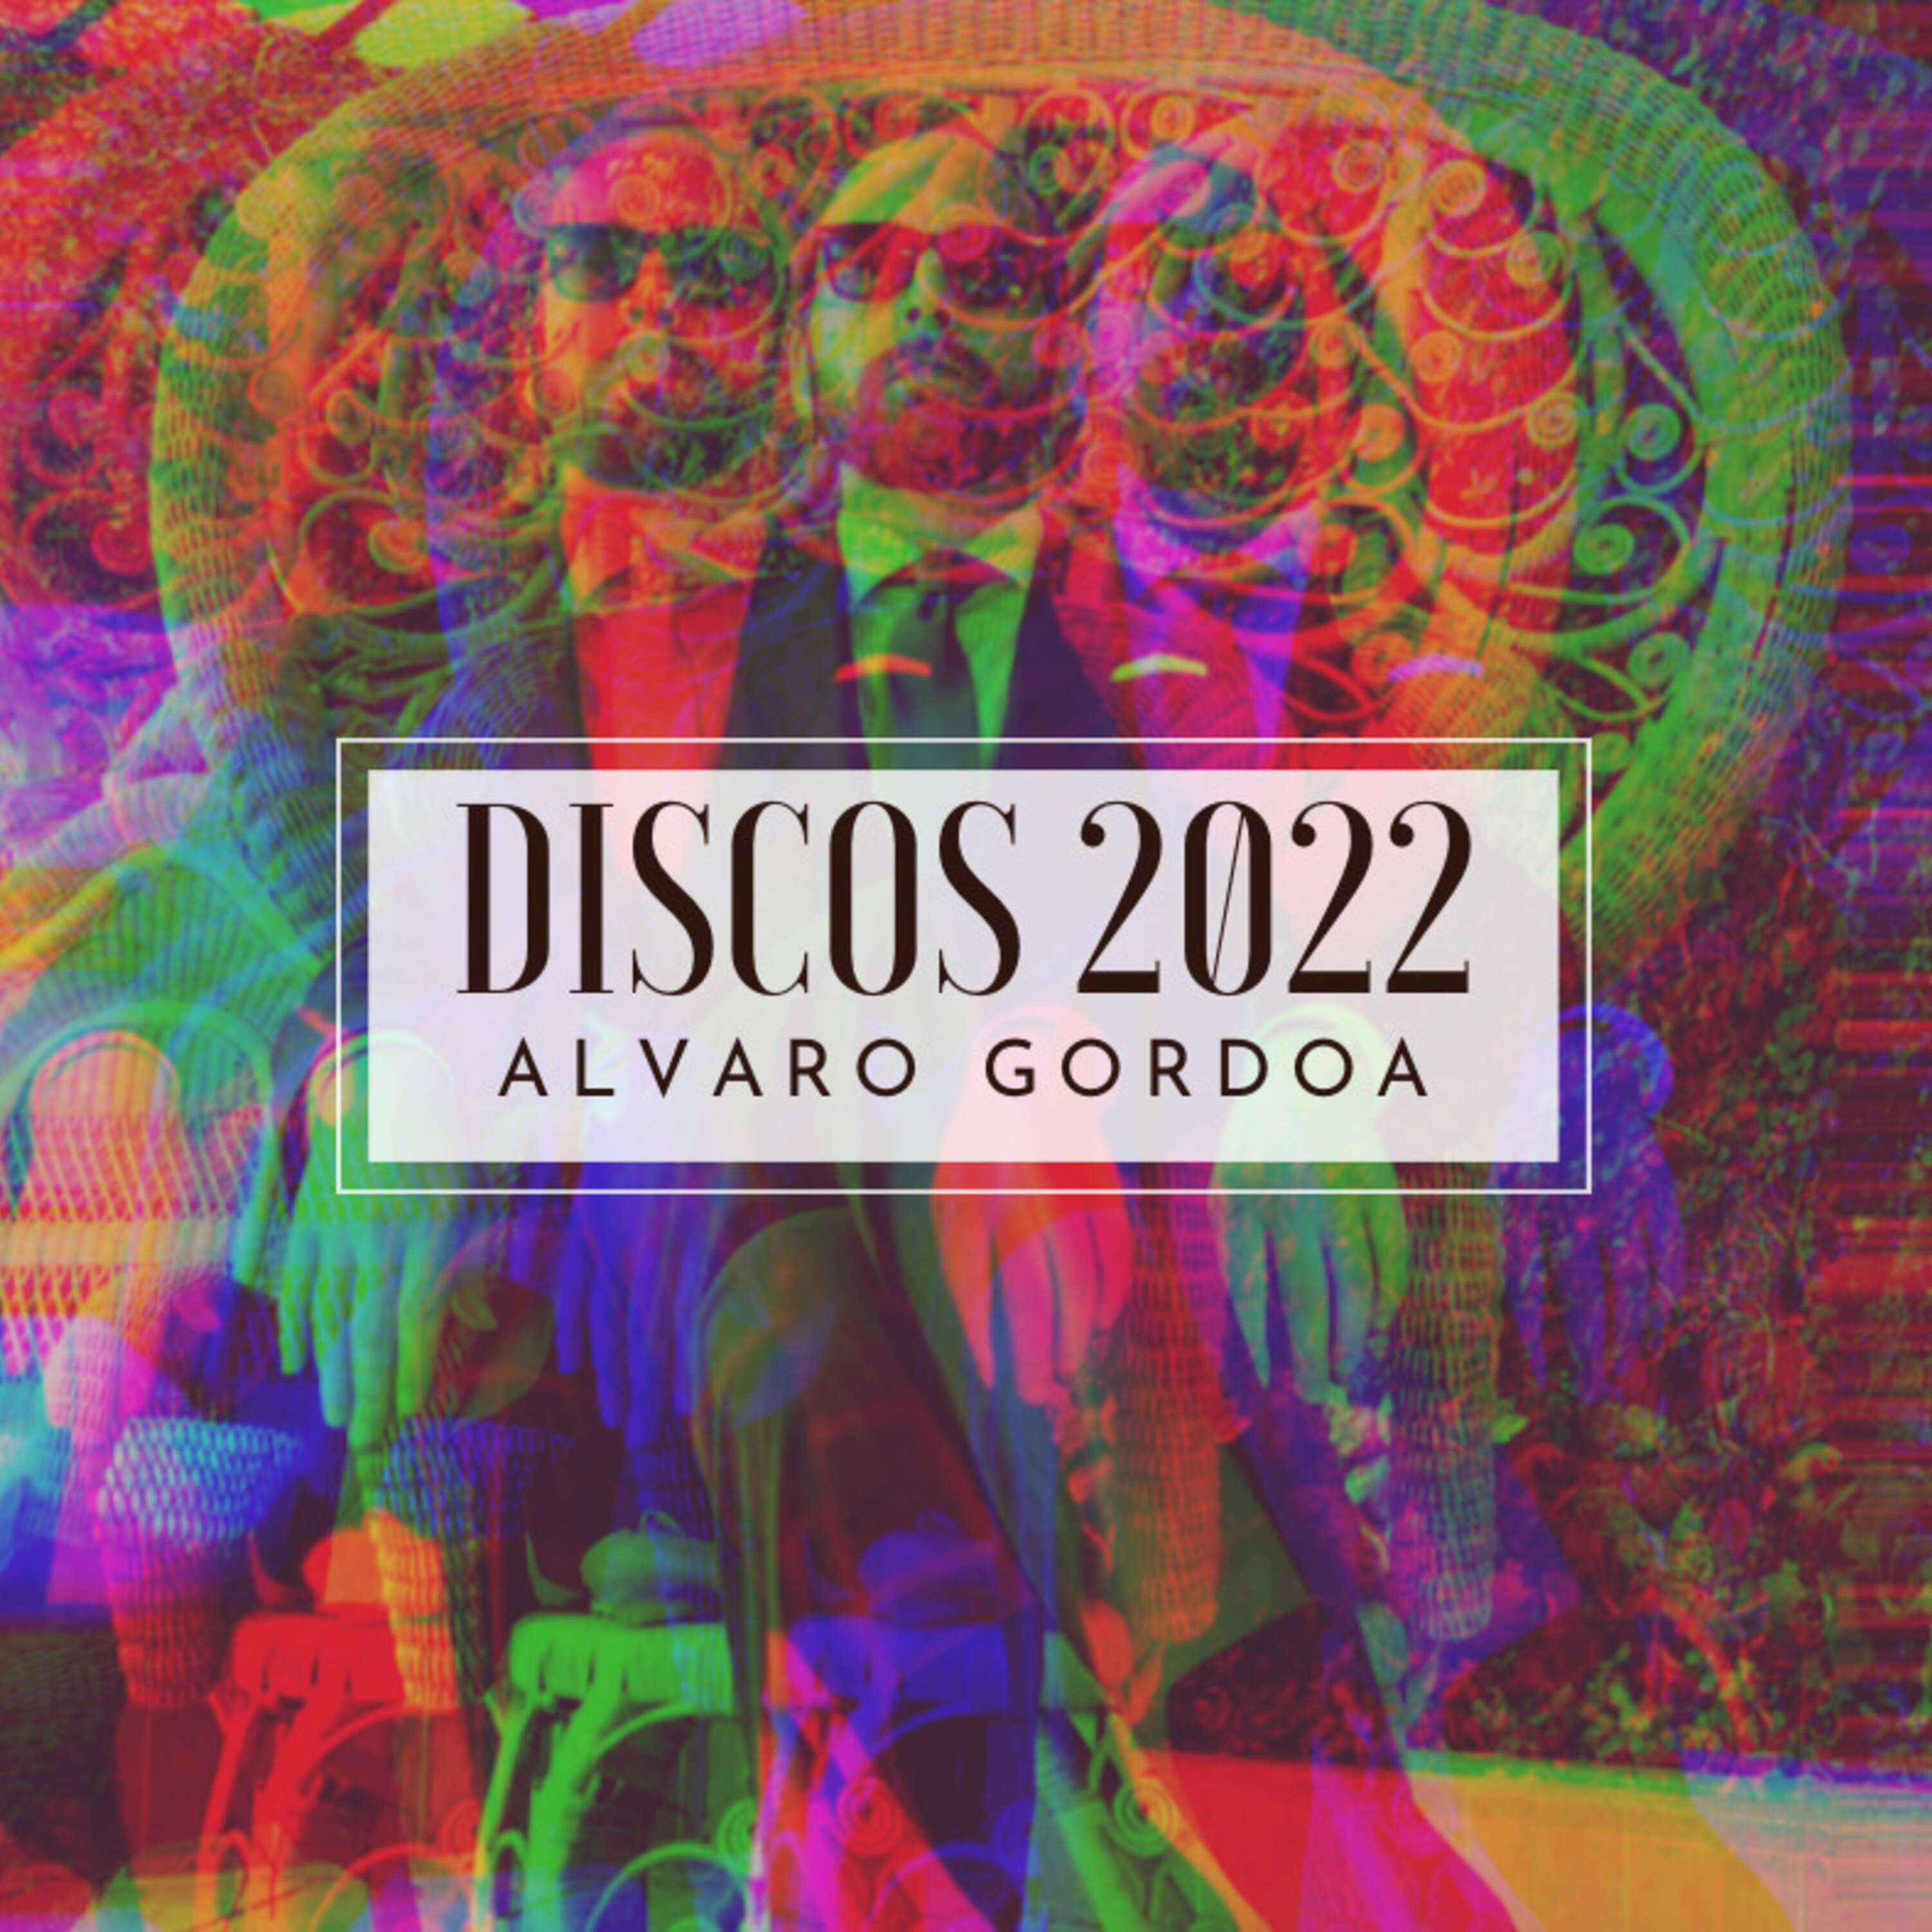 Discos 2022 Alvaro Gordoa